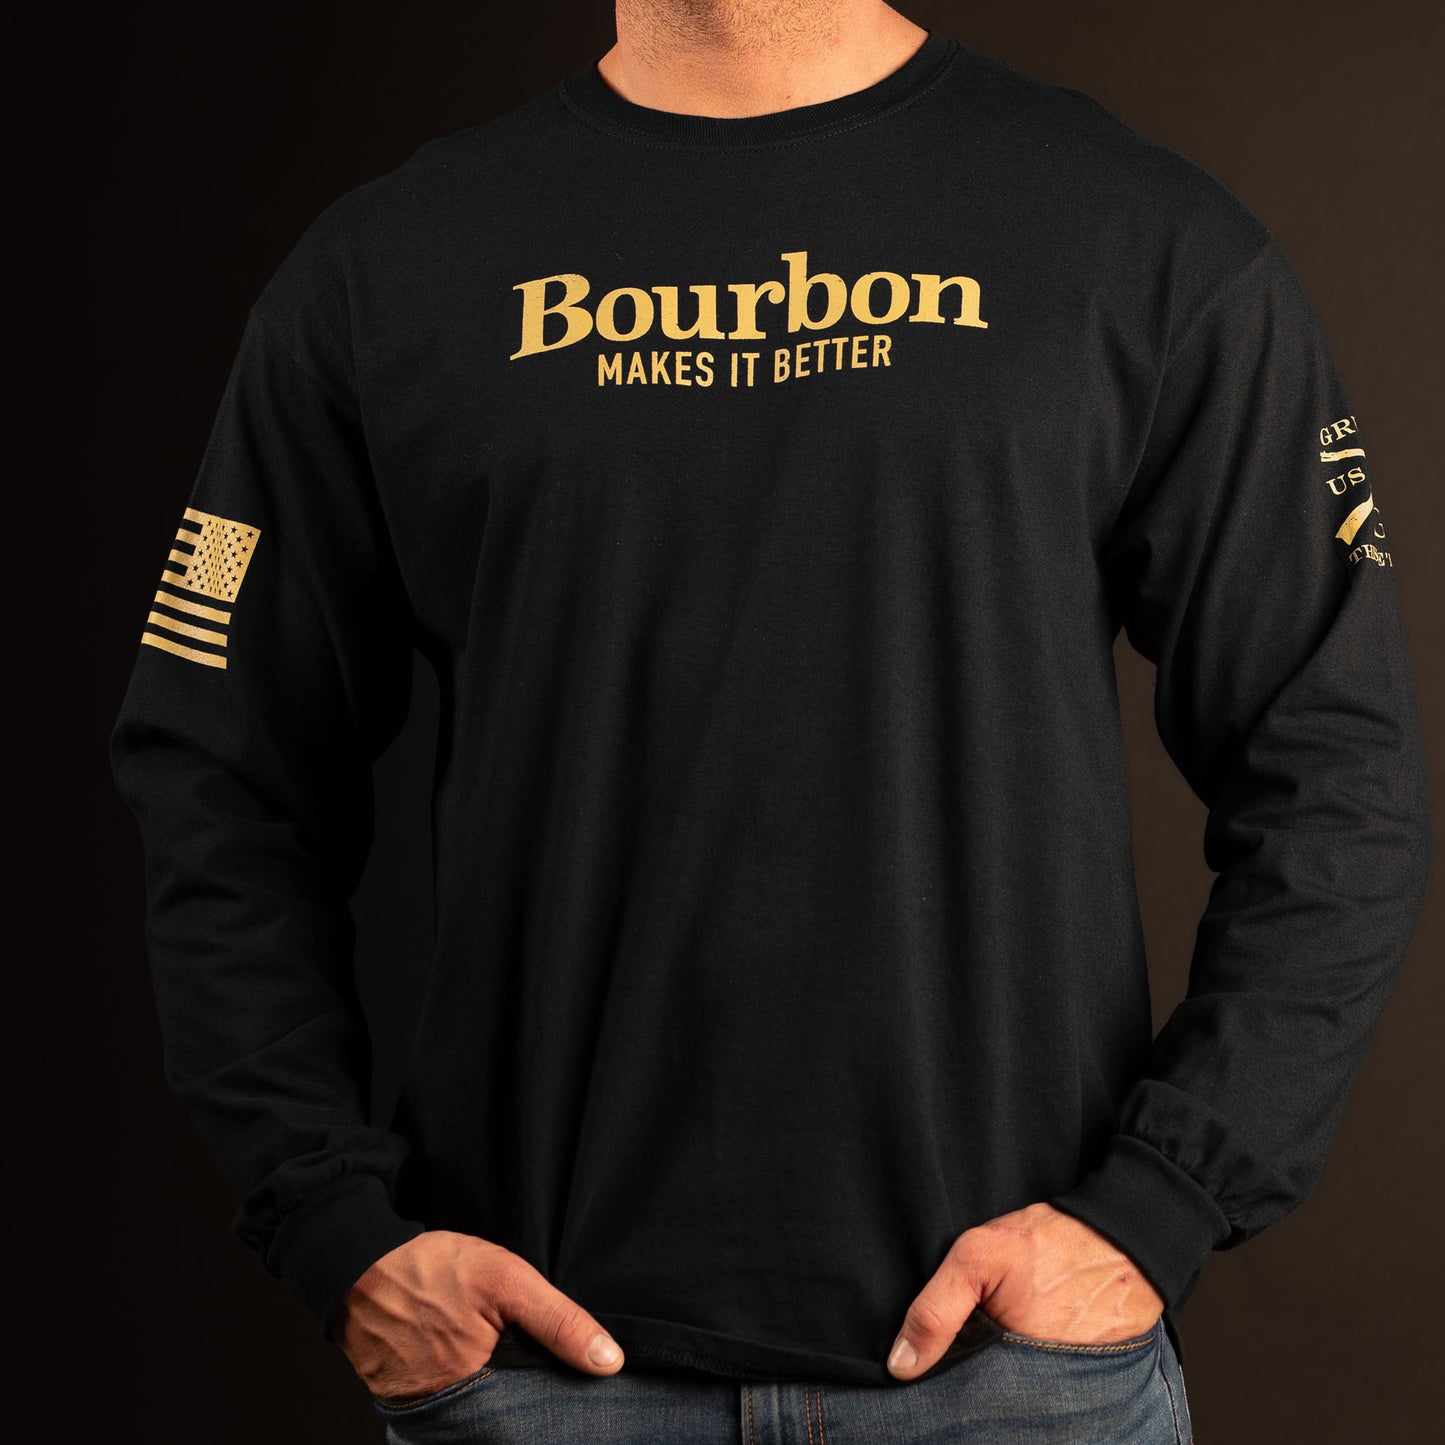 Patriotic Drinking Shirts - Bourbon Makes It Better - Long Sleeve T-Shirt 